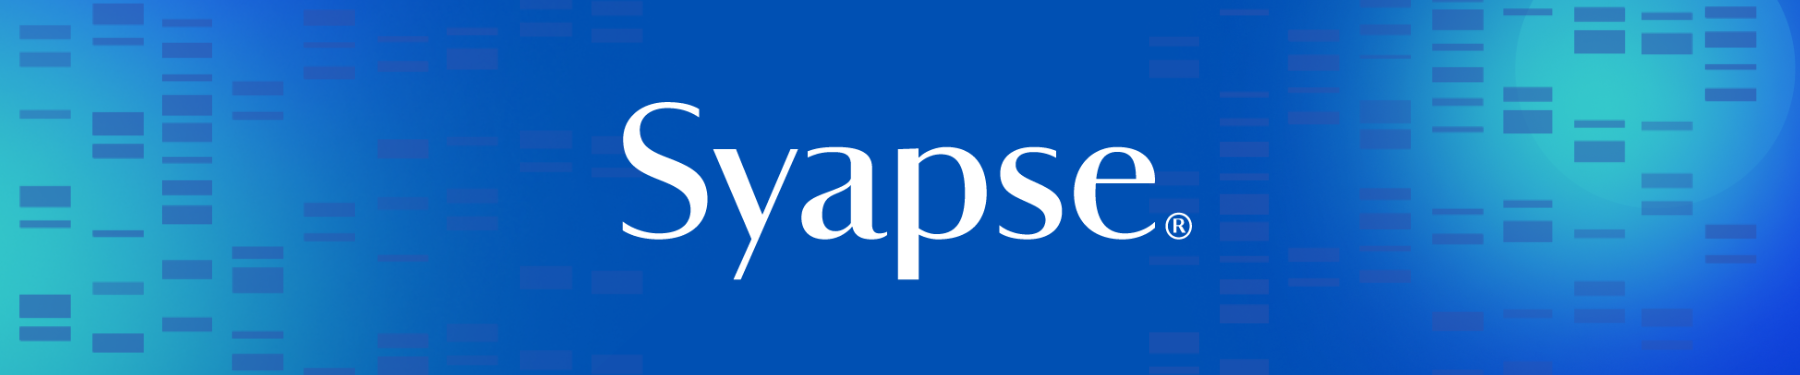 Generic Syapse Hubspot Banners (1)